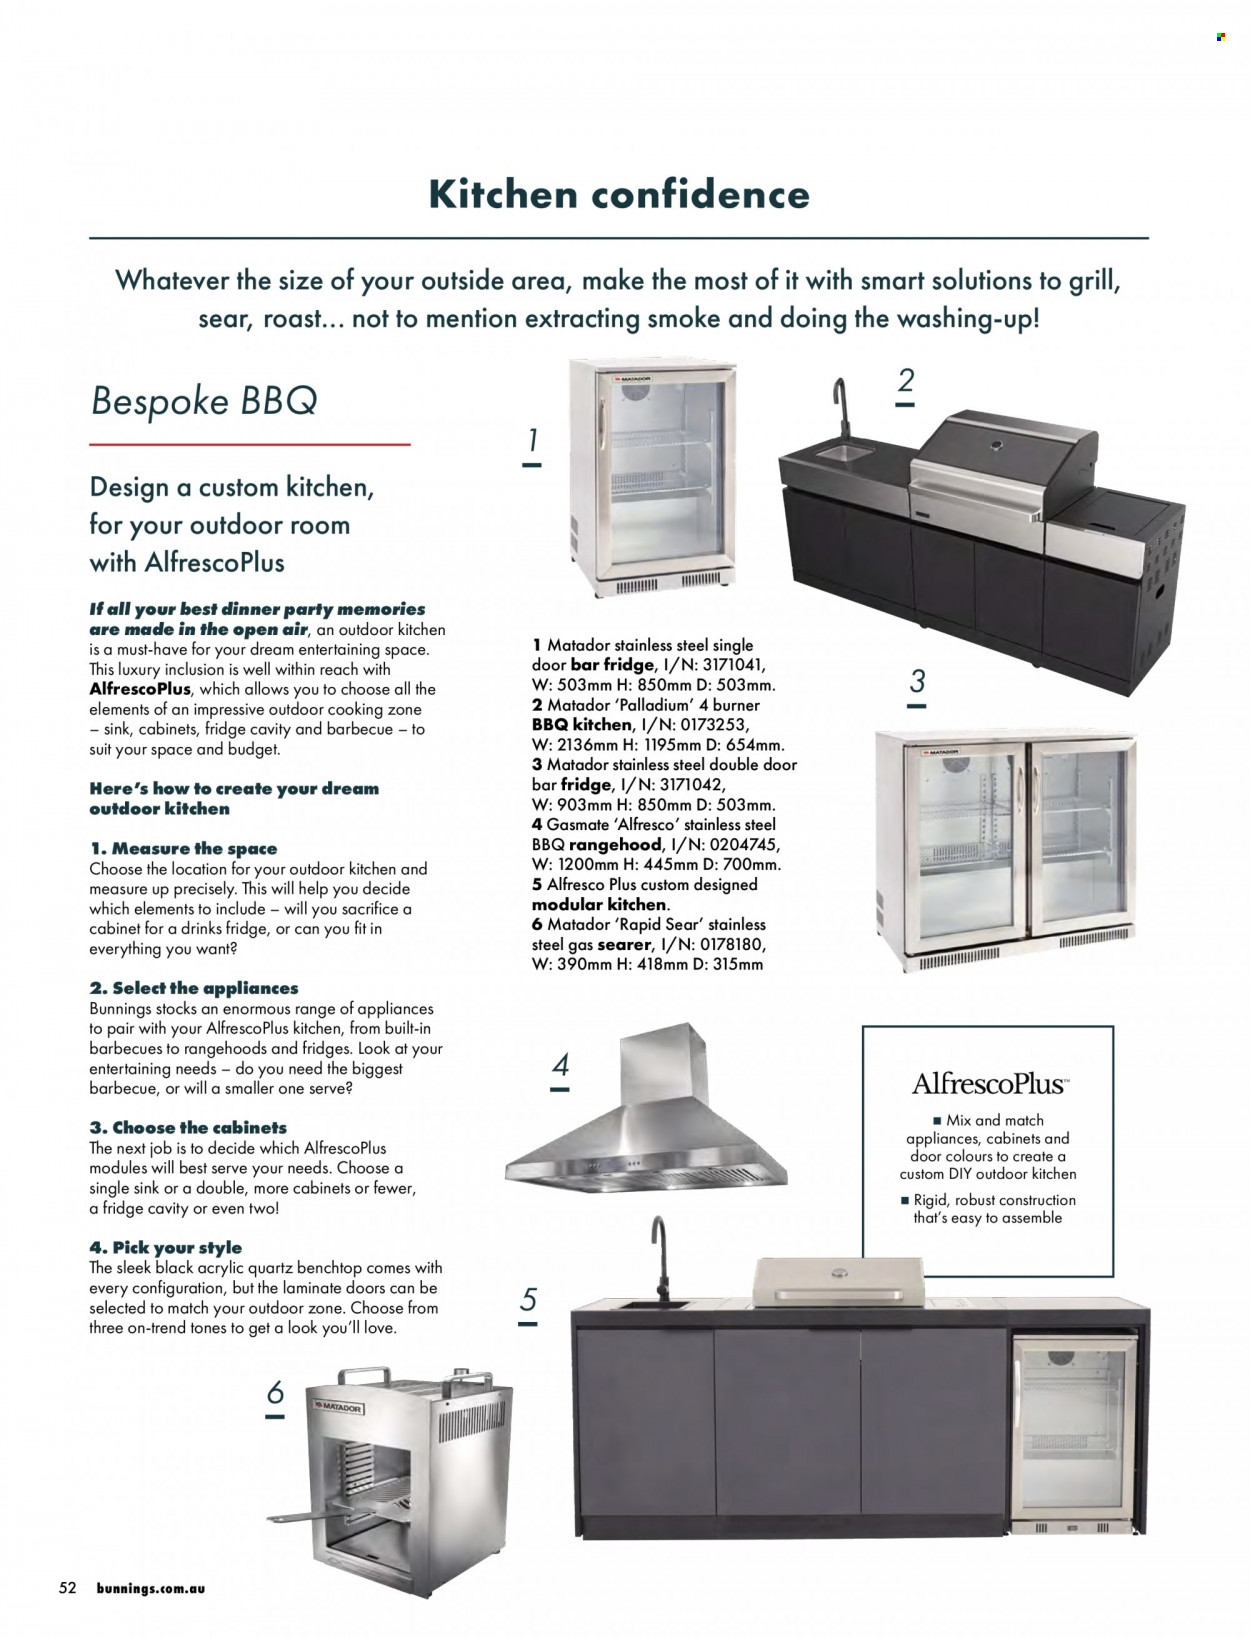 thumbnail - Bunnings Warehouse Catalogue - Sales products - cabinet, refrigerator, bar fridge, fridge, grill. Page 52.